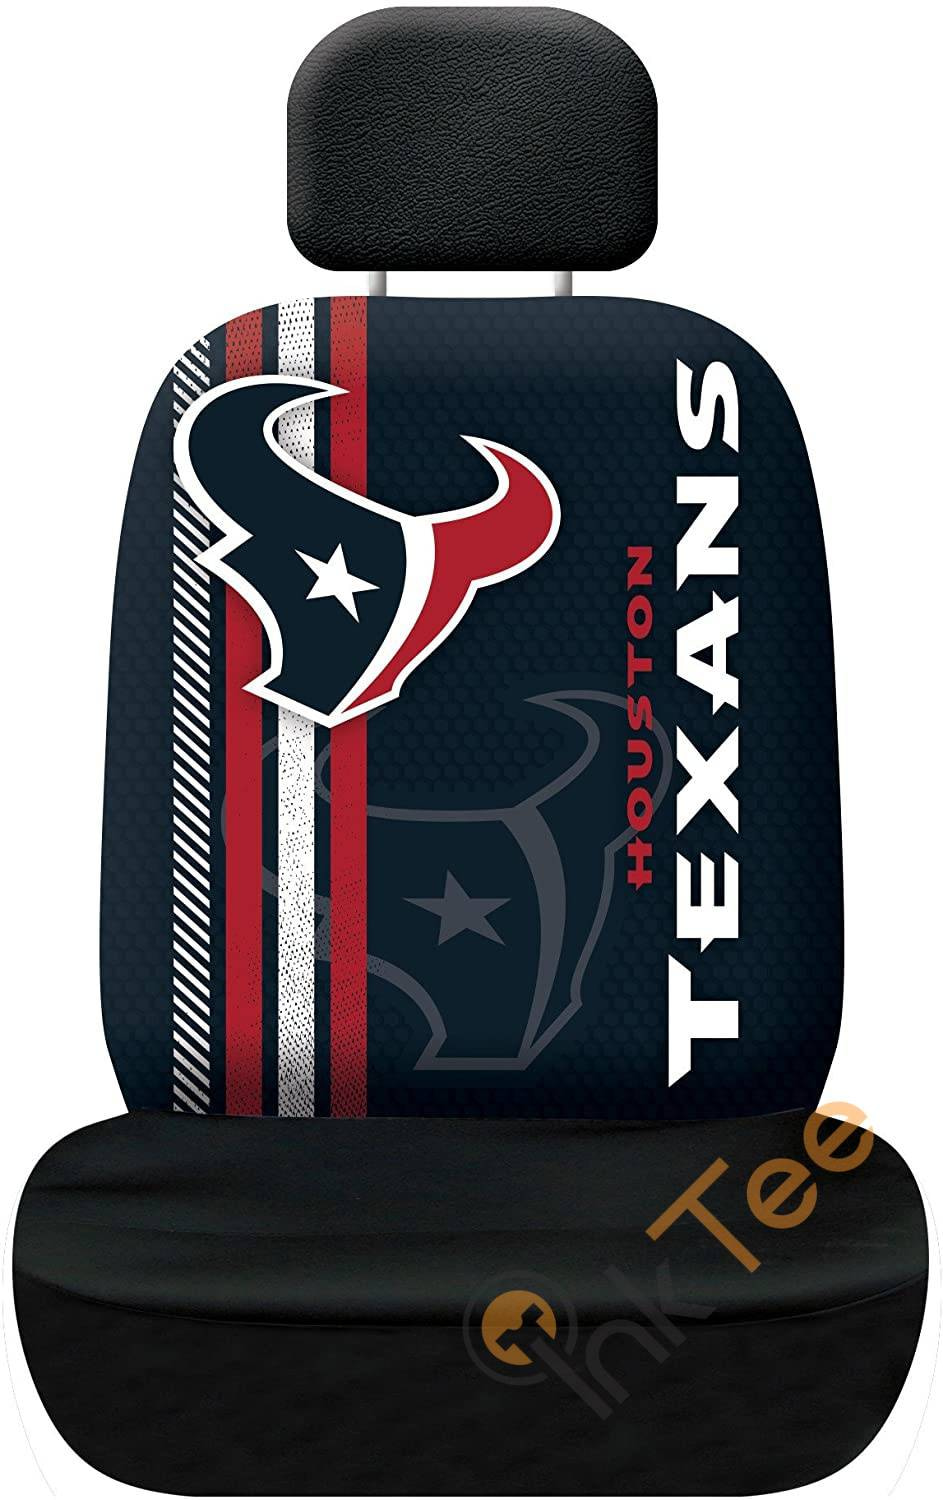 Nfl Houston Texans Team Seat Cover